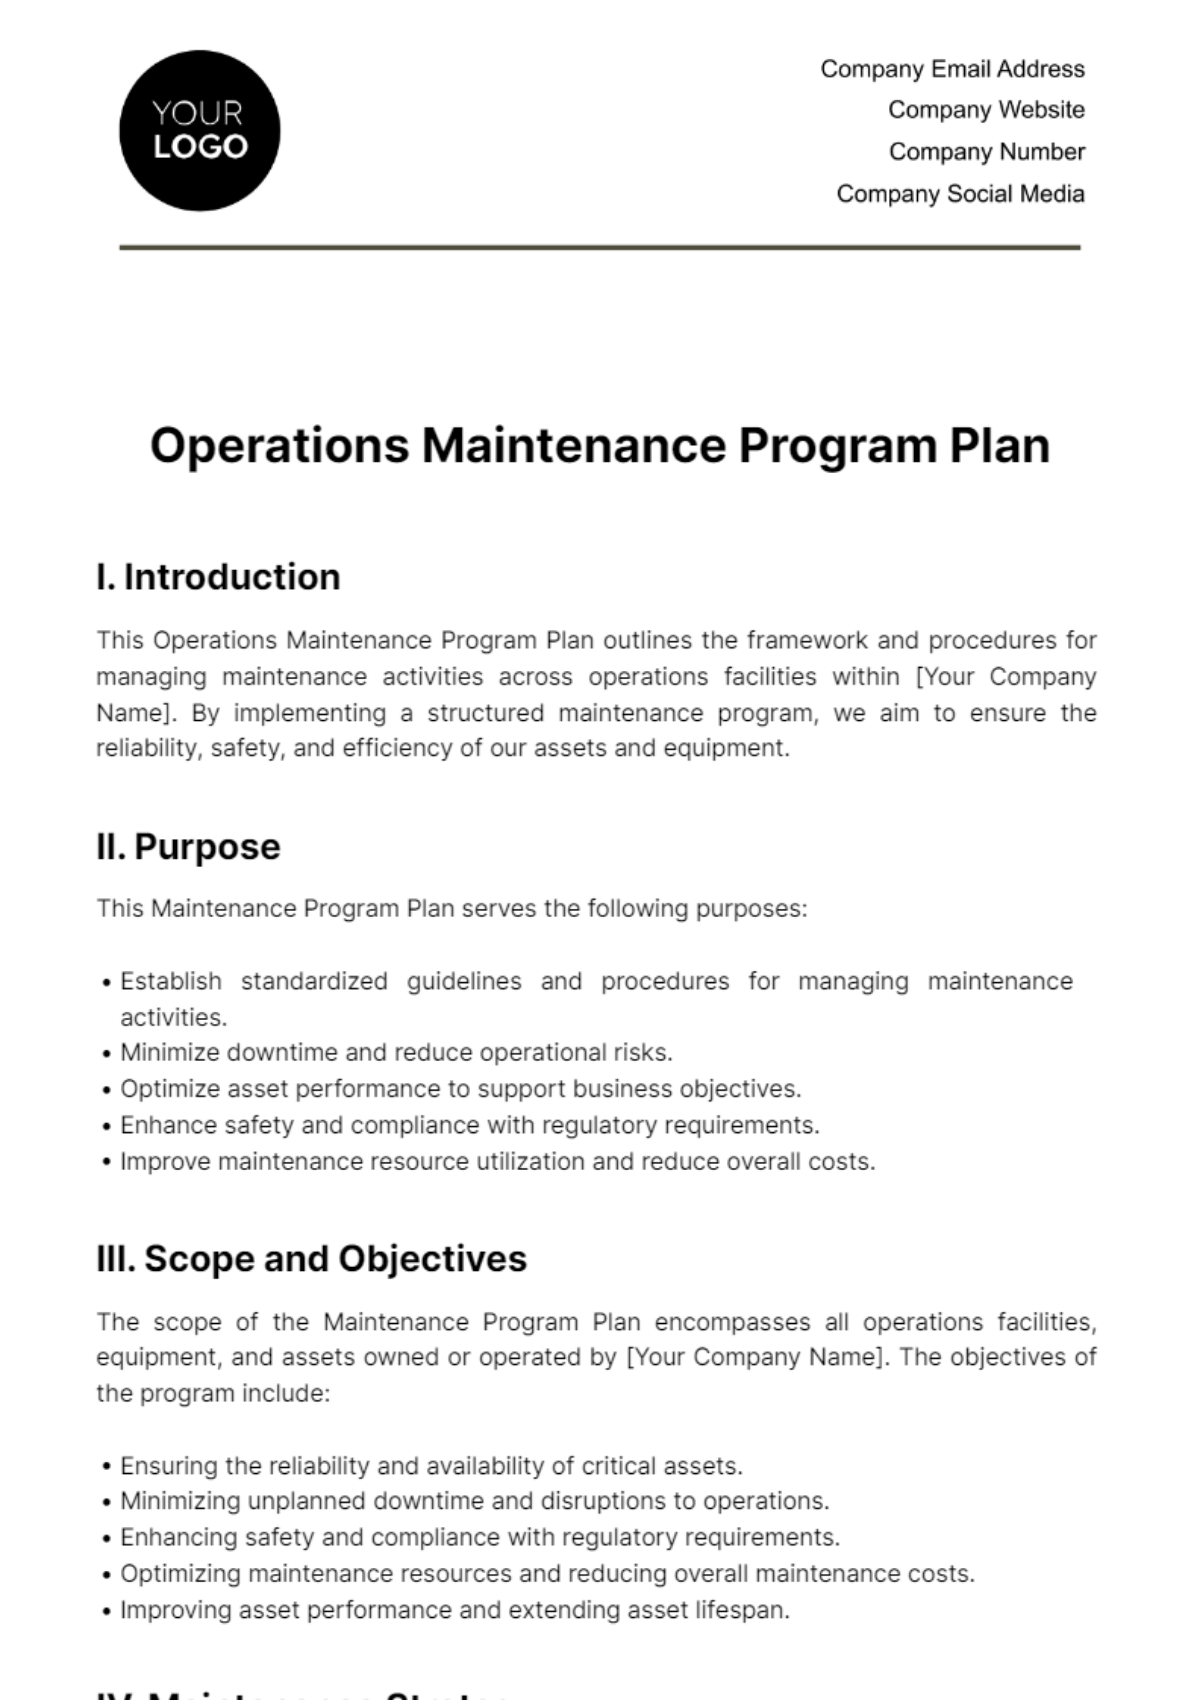 Free Operations Maintenance Program Plan Template